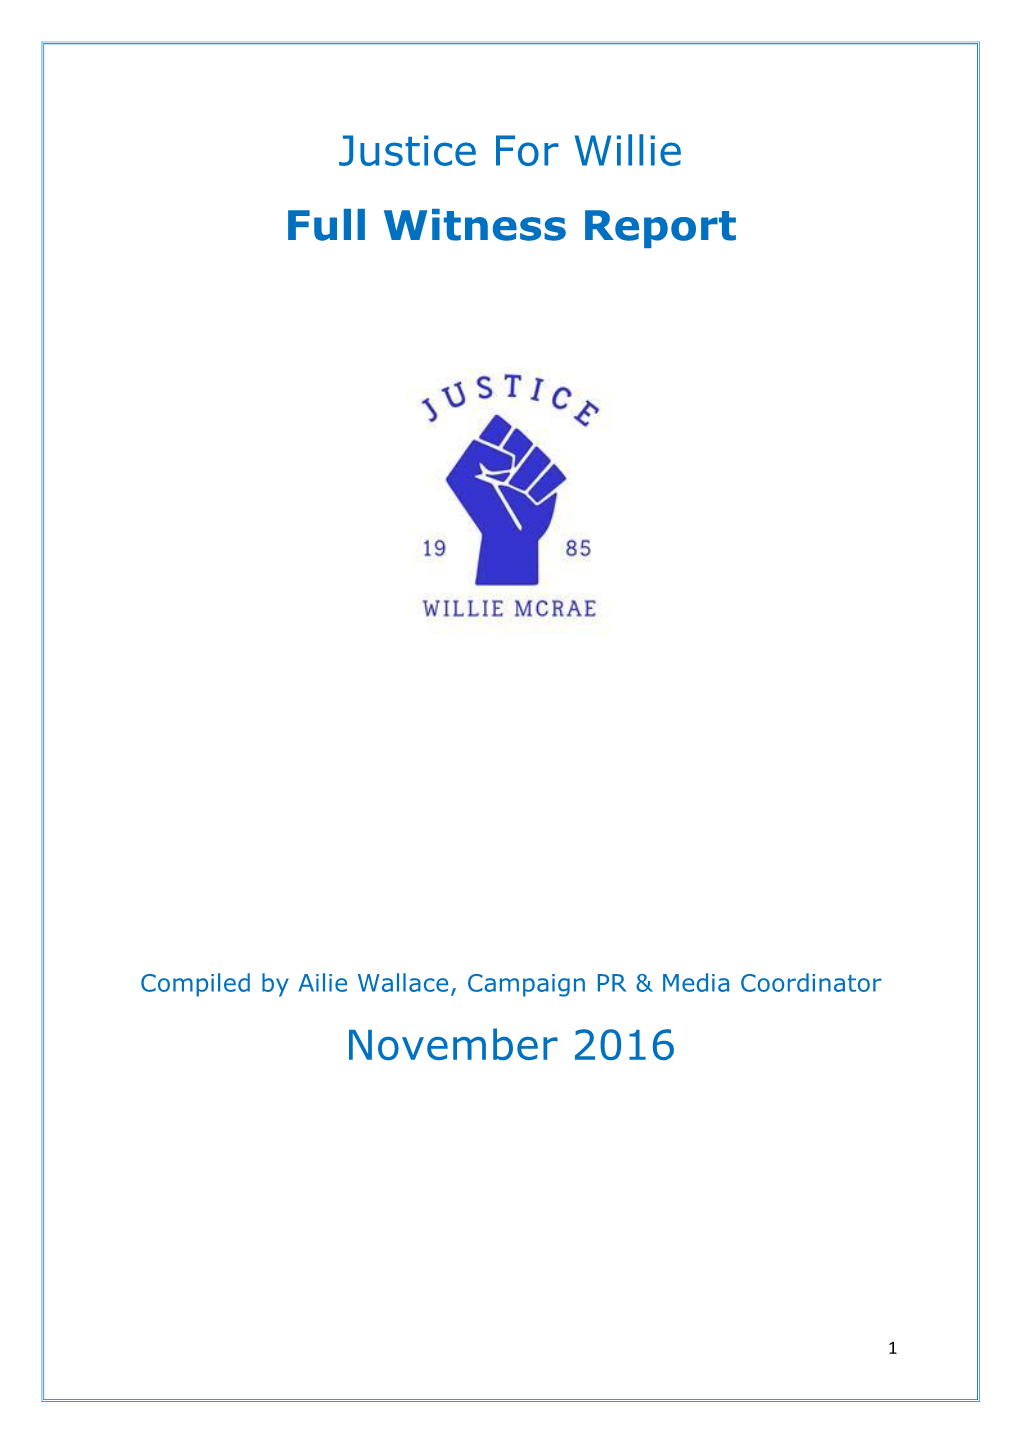 Justice for Willie Full Witness Report November 2016